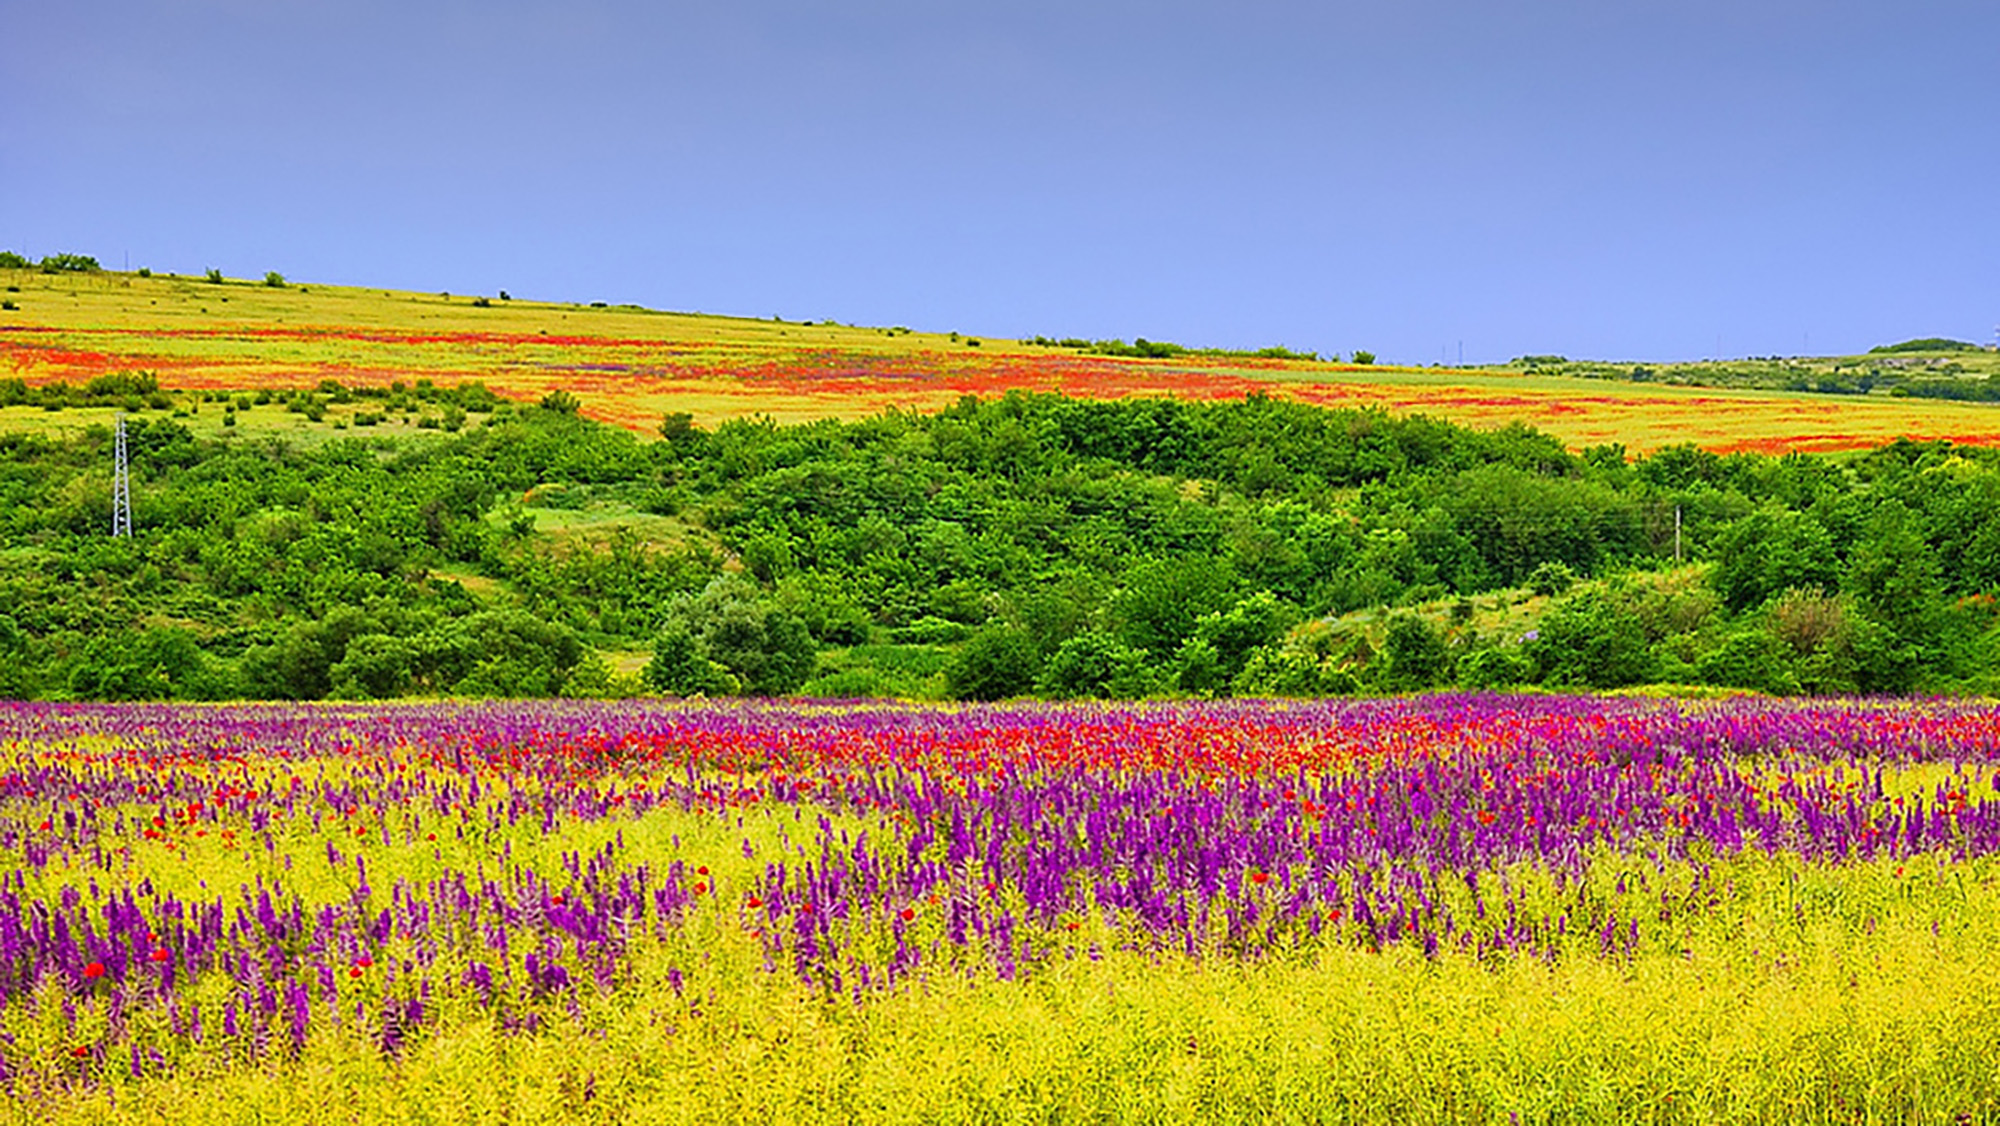 Amazing landscapes bursting with springtime beauty | OverSixty